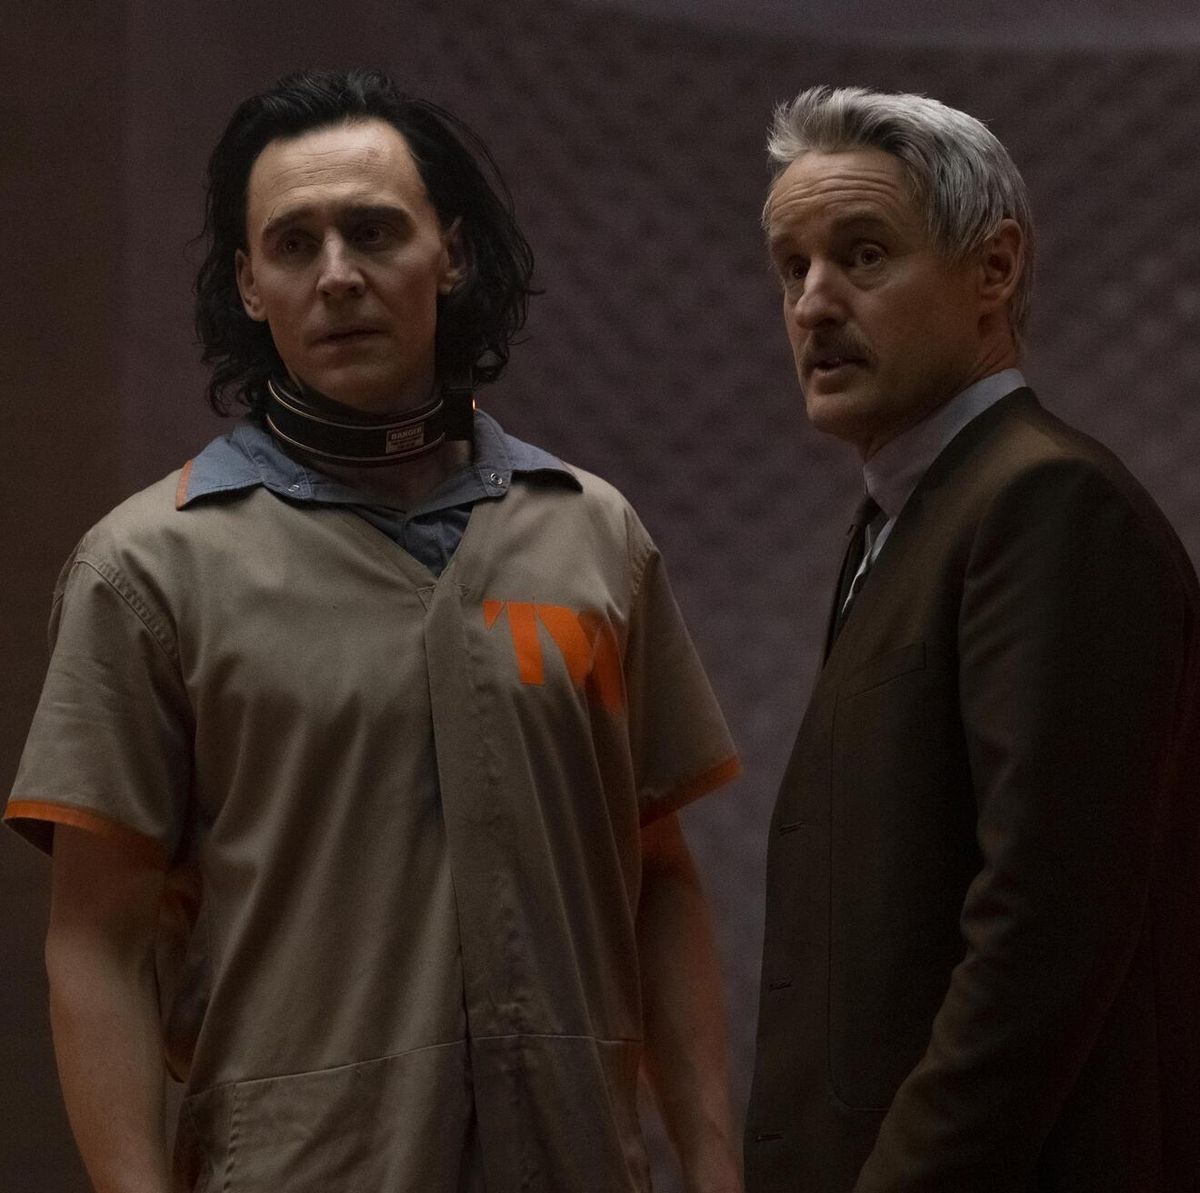 Loki Season 2 Episode 5 Finally Reveals Mobius' Alternate Life, Raises More  Questions